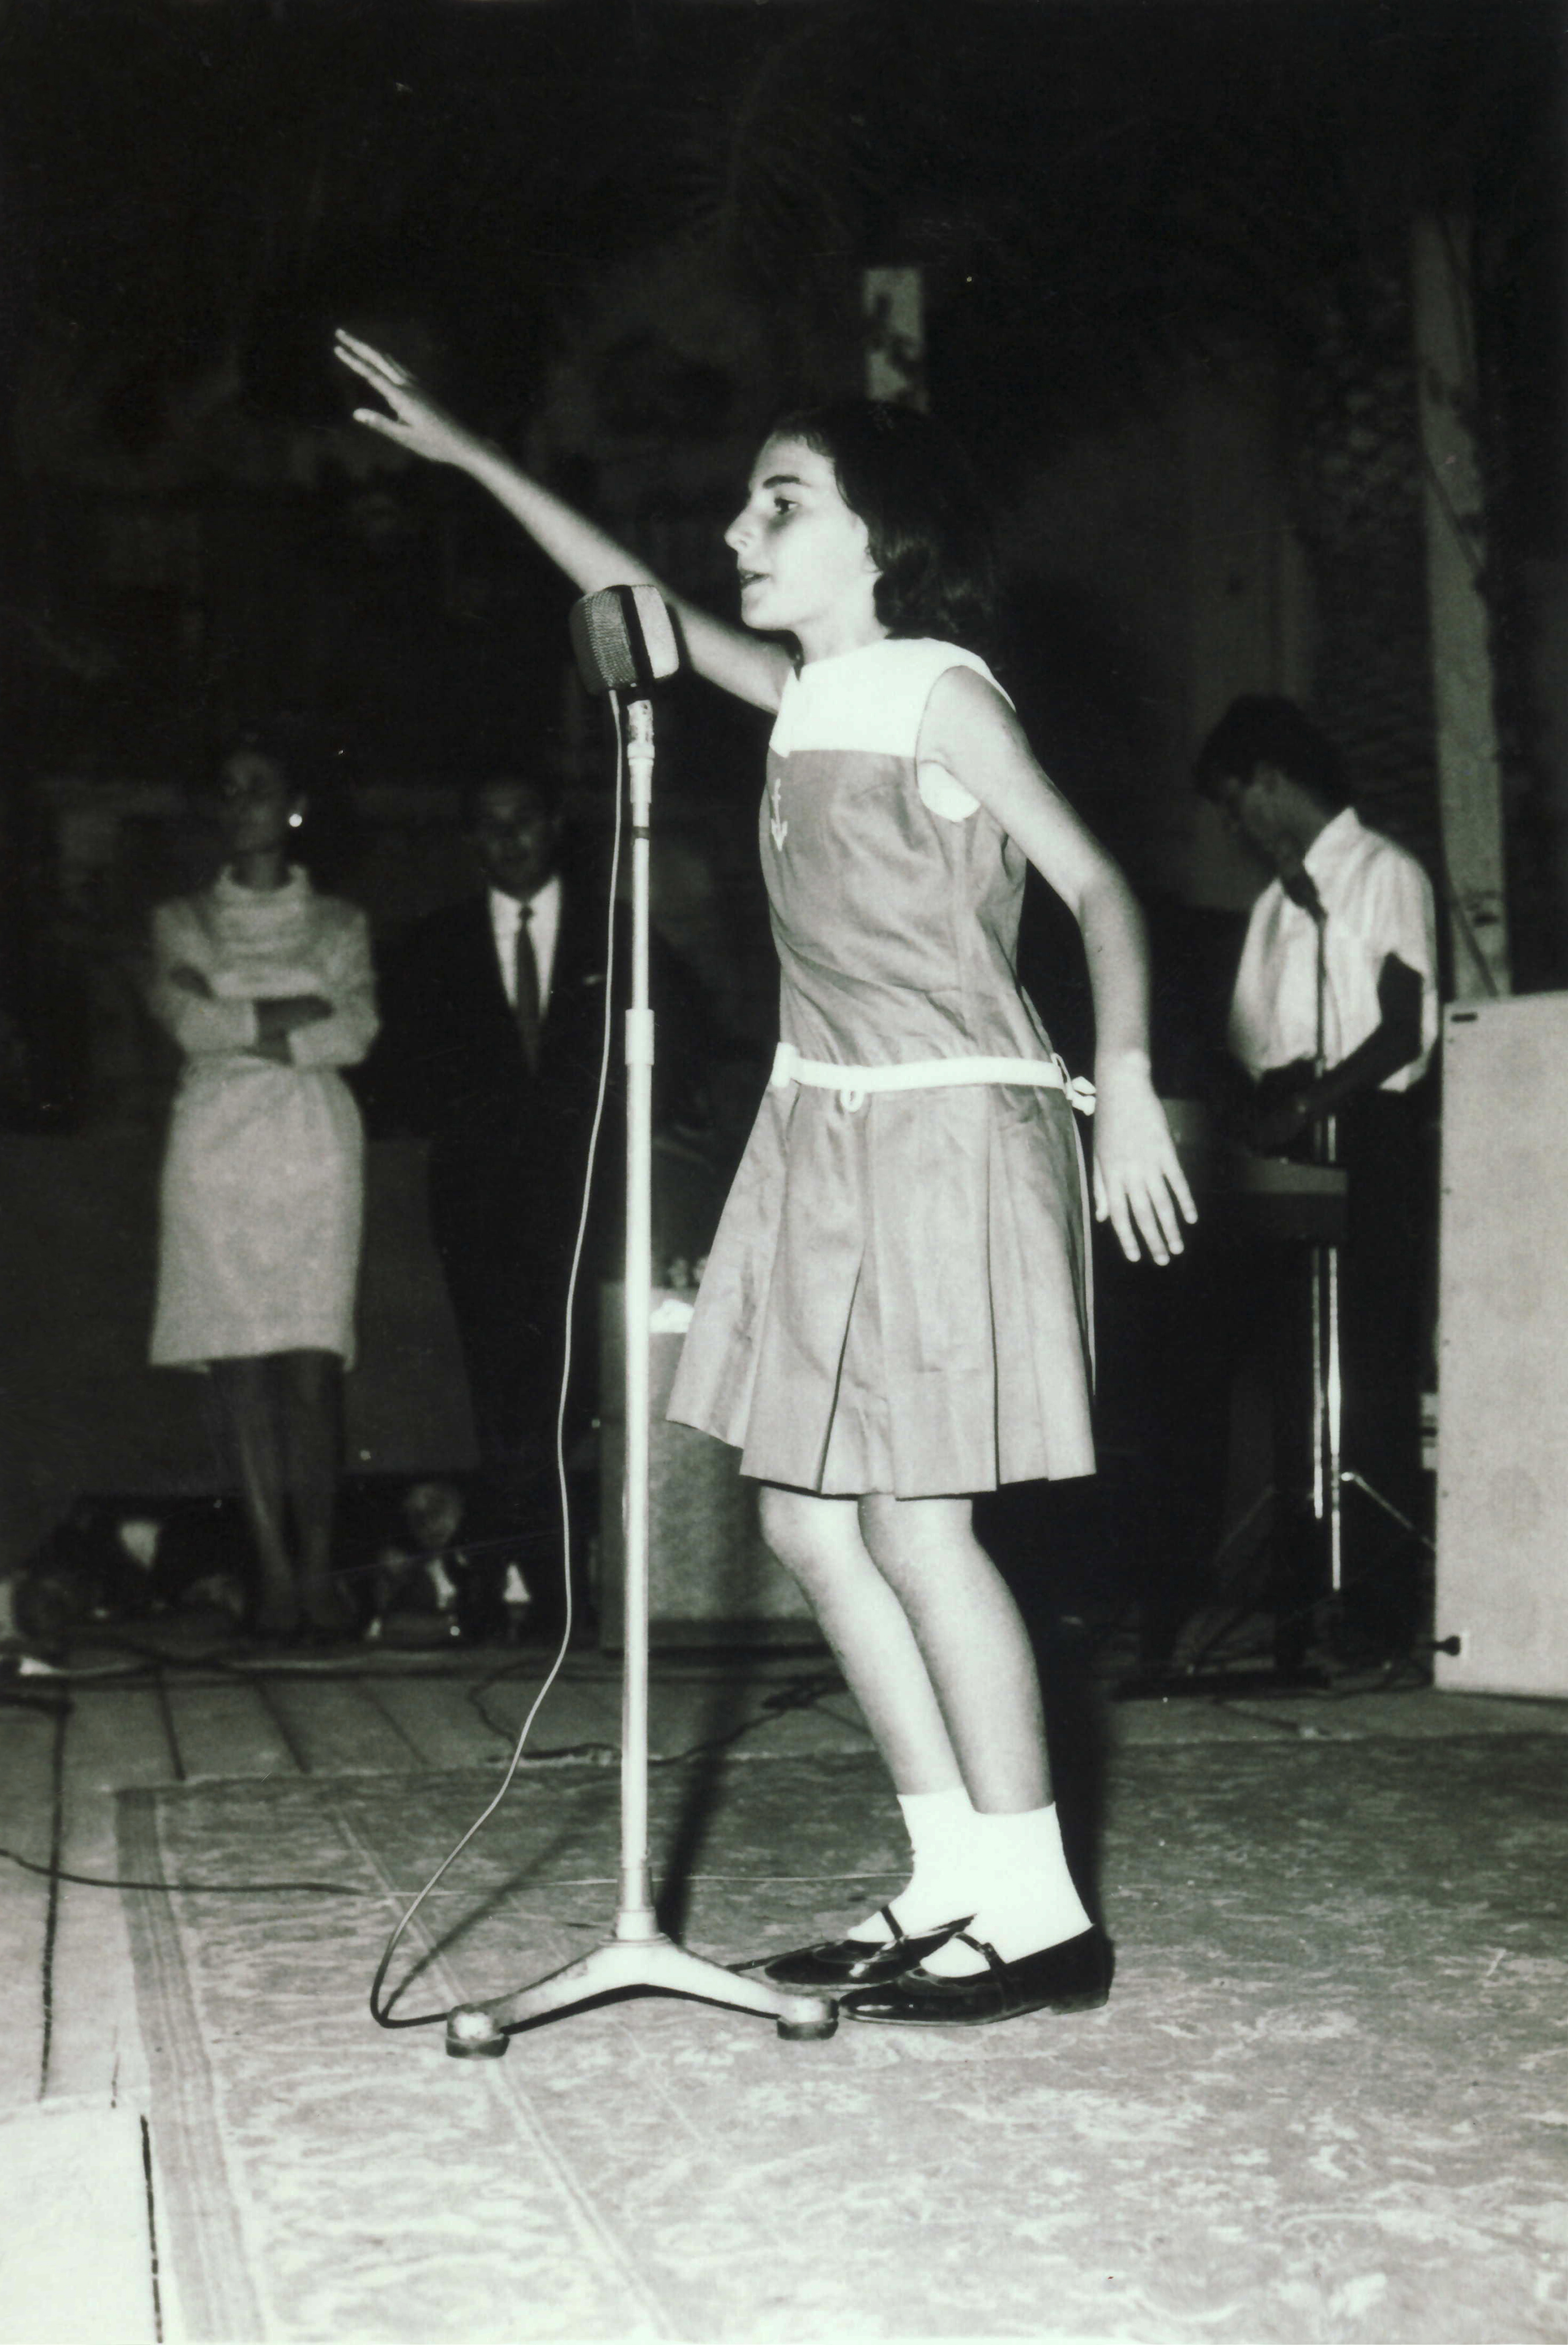 Lucia Aliberti⚘Child⚘On Stage⚘she Began to Sing⚘Cute Picture⚘Sicily⚘:http://www.luciaaliberti.it #luciaaliberti #child #sings #onstage #sicily